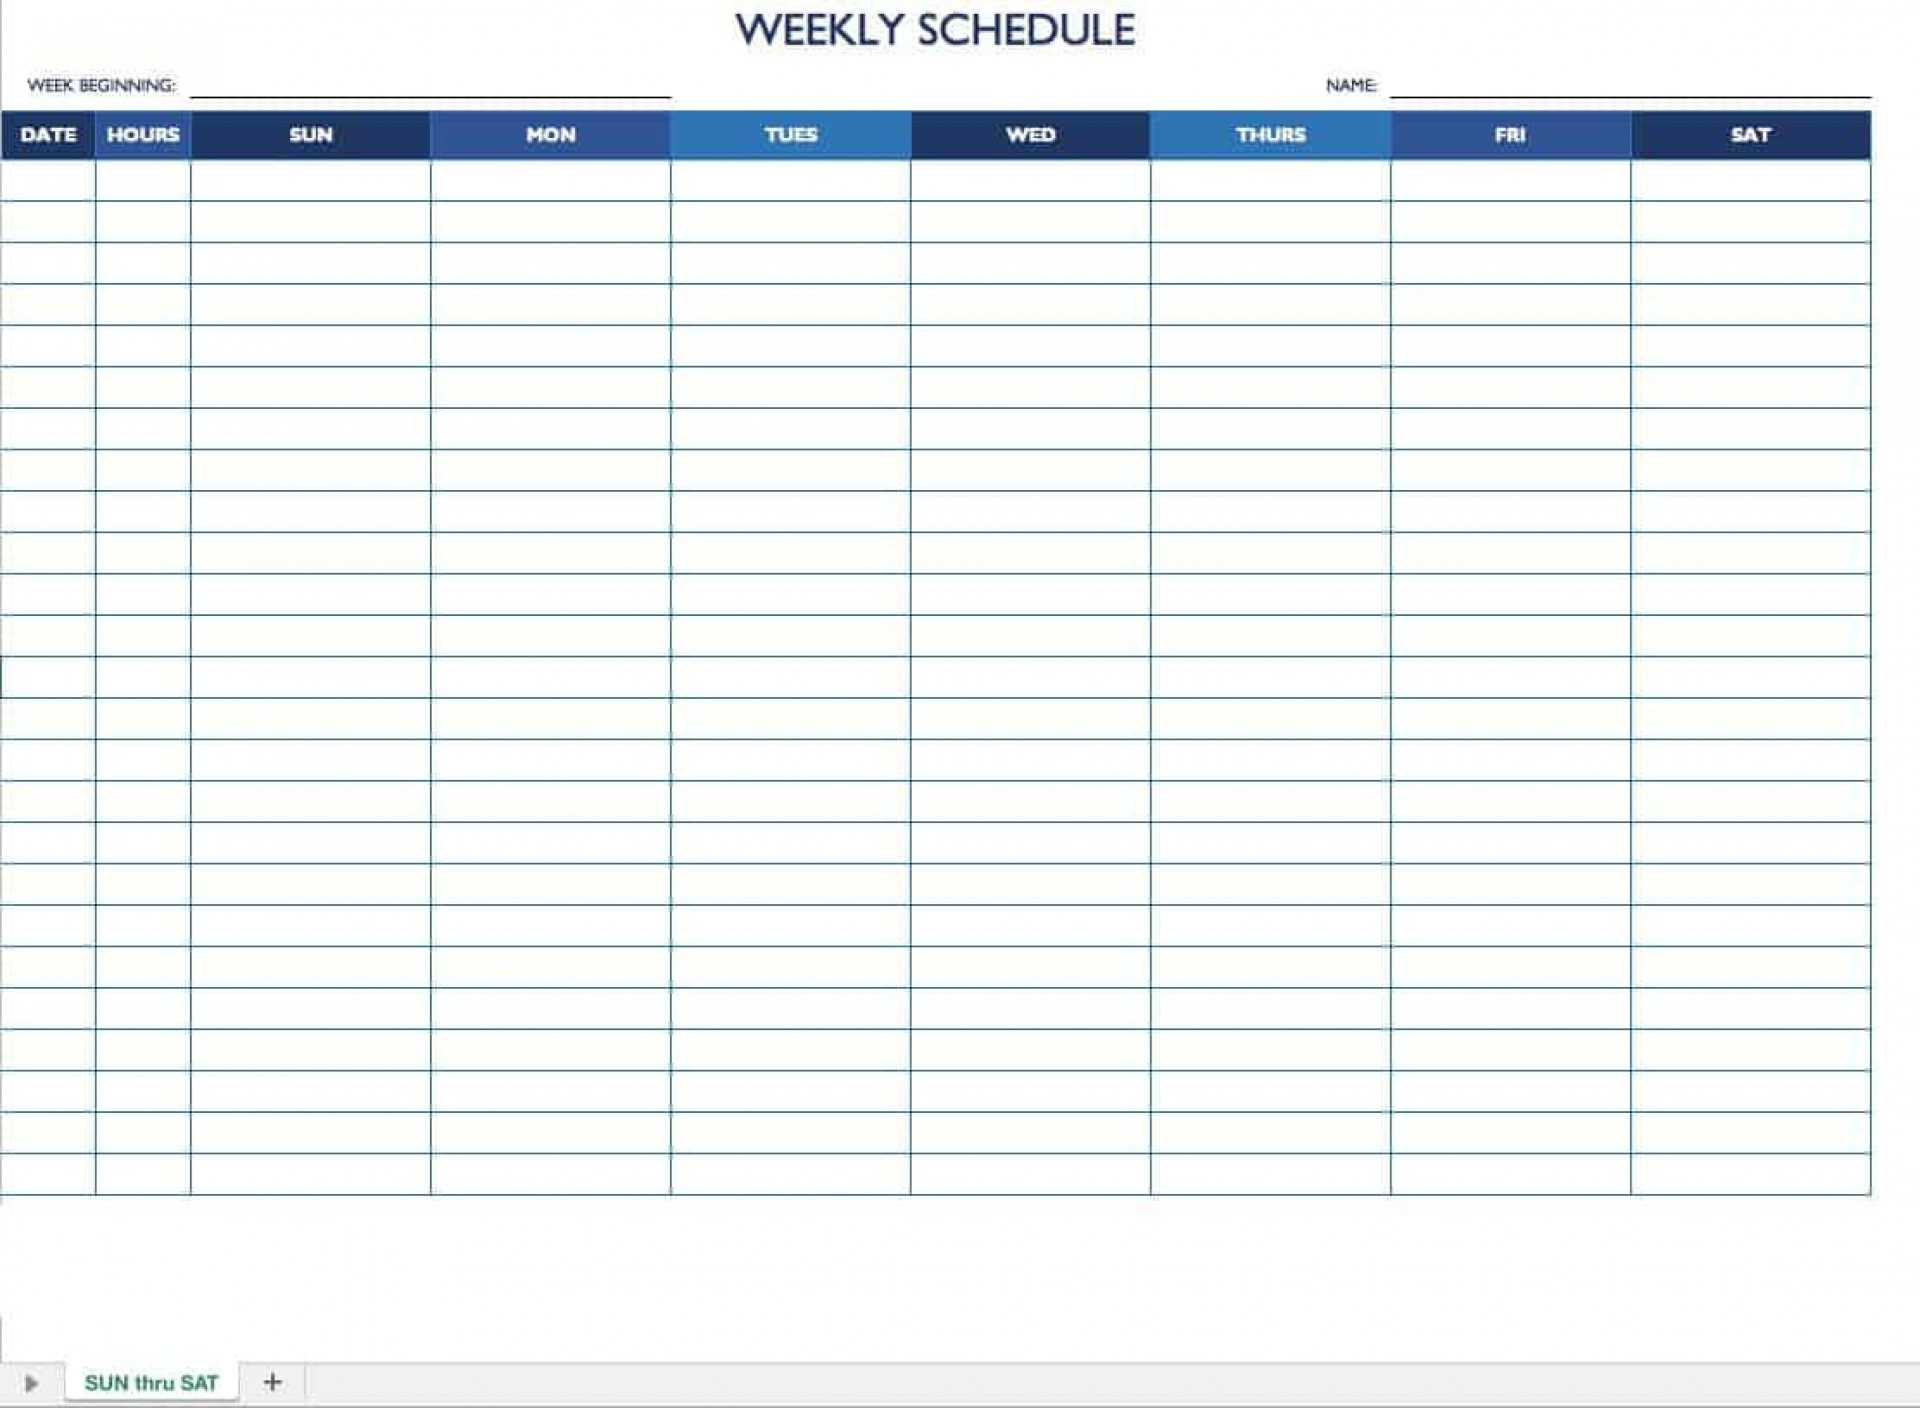 024 Weekly Schedule Days Template Ideas Work Schedules With Regard To Blank Monthly Work Schedule Template